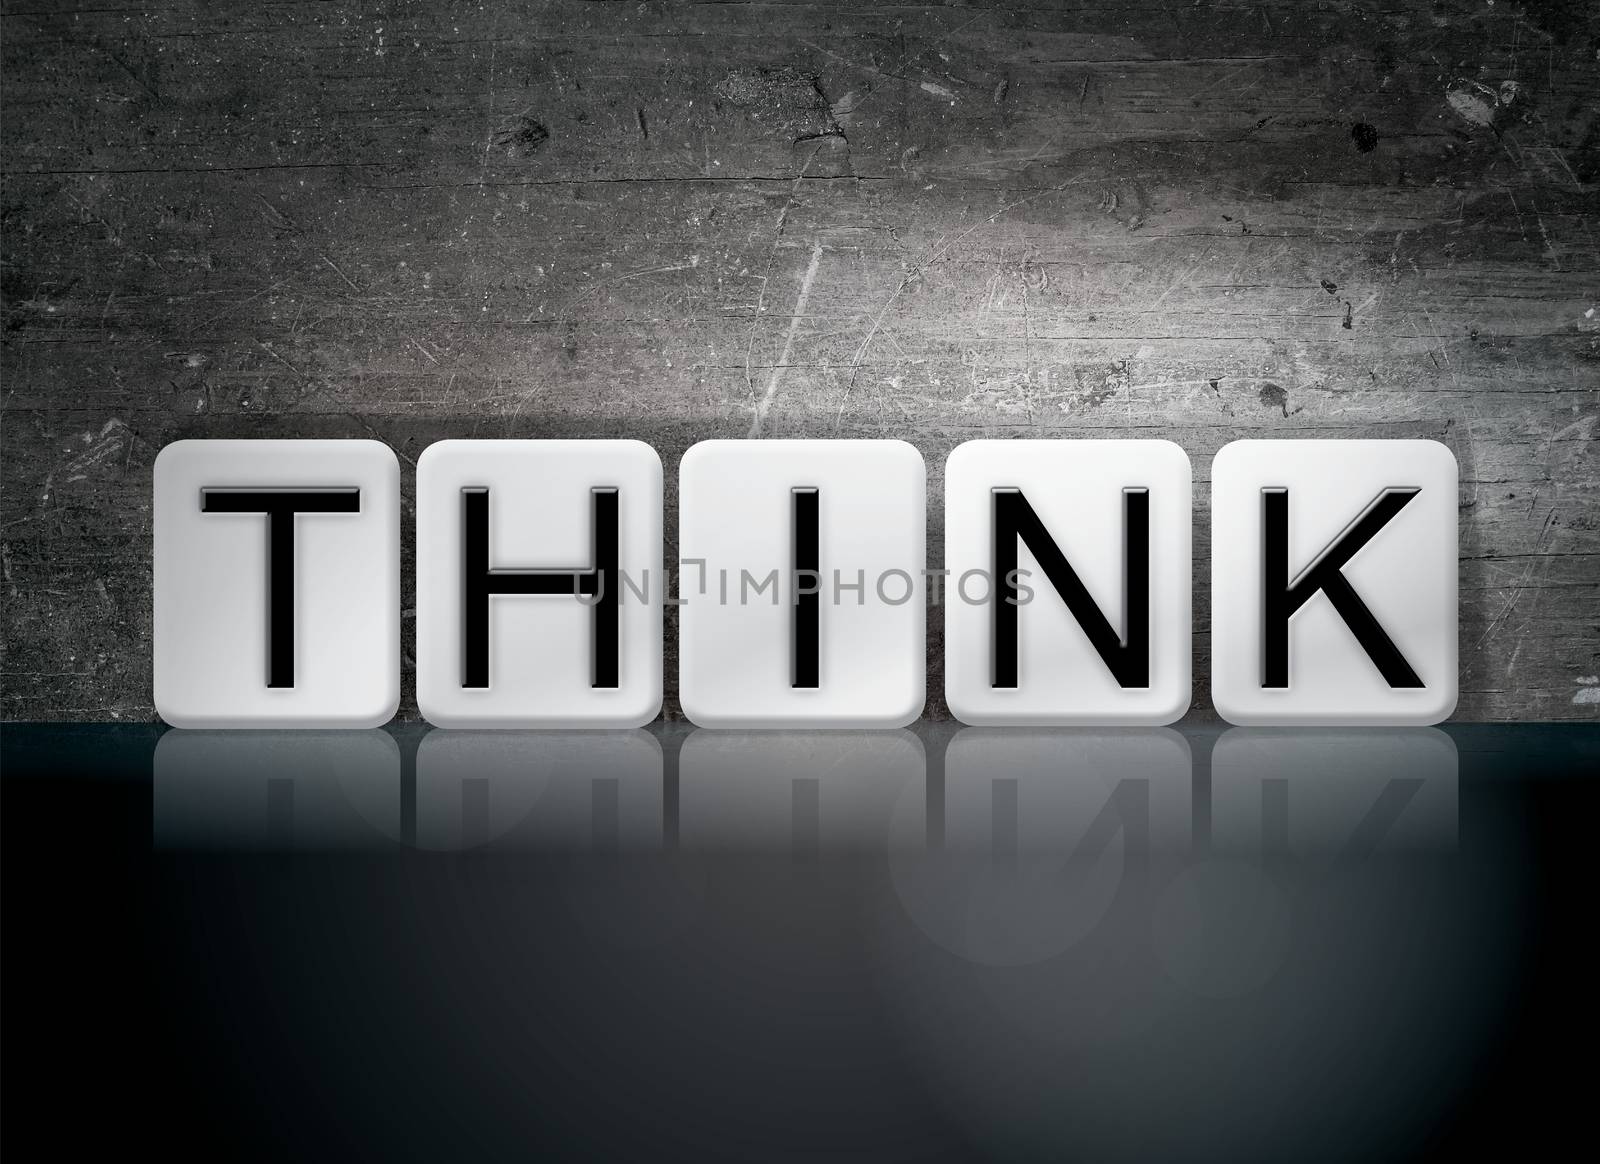 The word "Think" written in white tiles against a dark vintage grunge background.